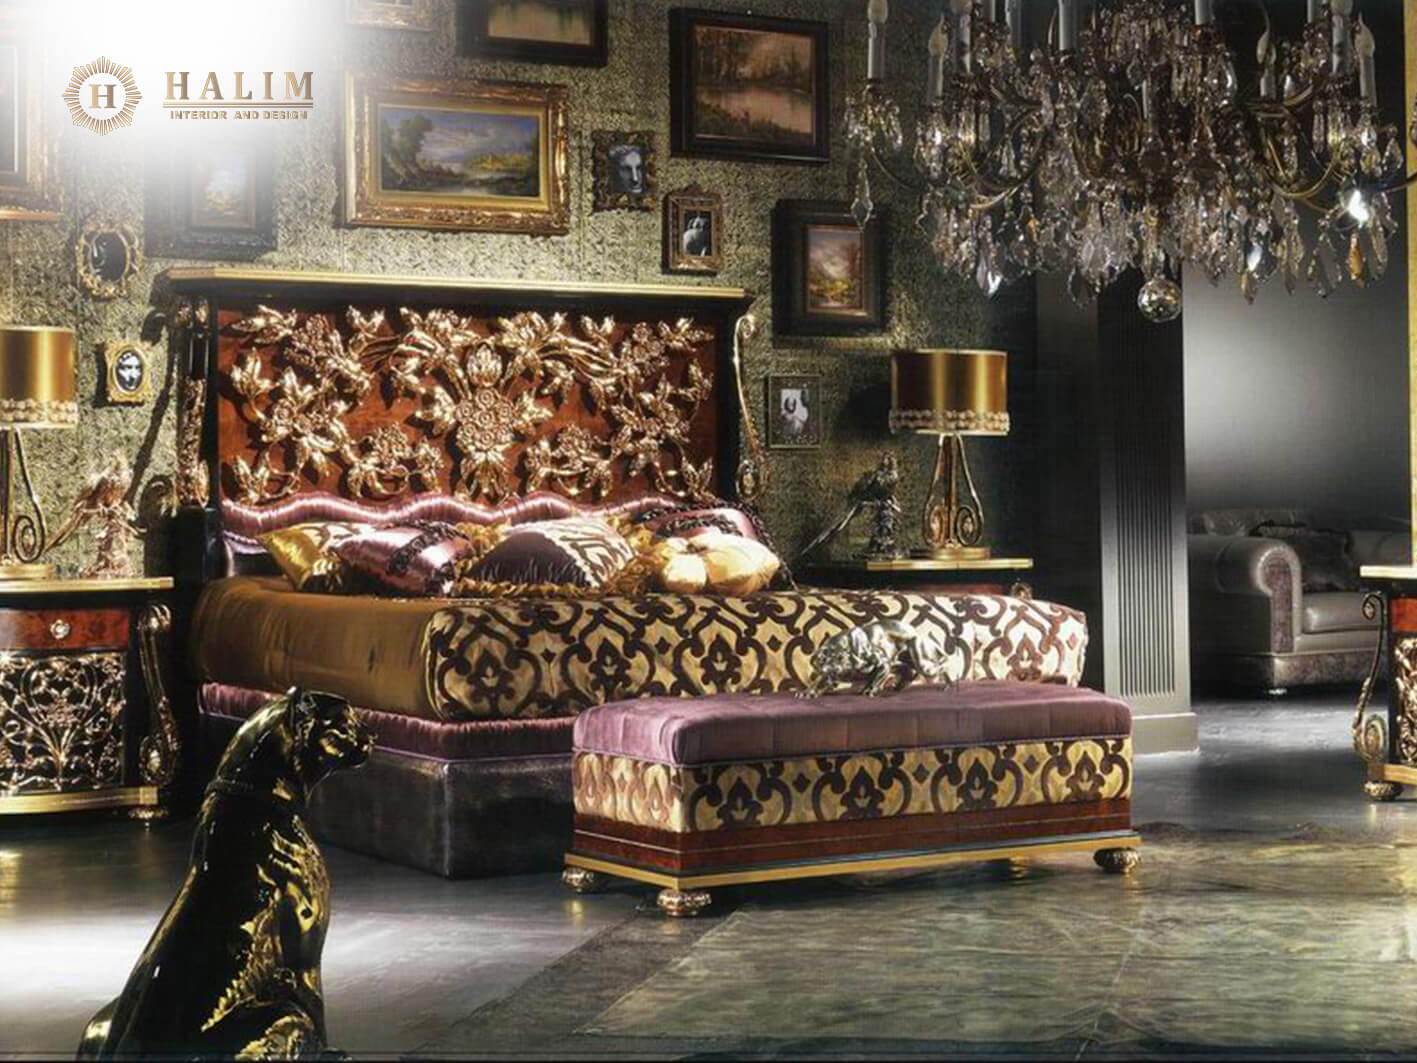 Halim Interior modern furniture contemporer american style minimalist european classic surabaya dupont bed